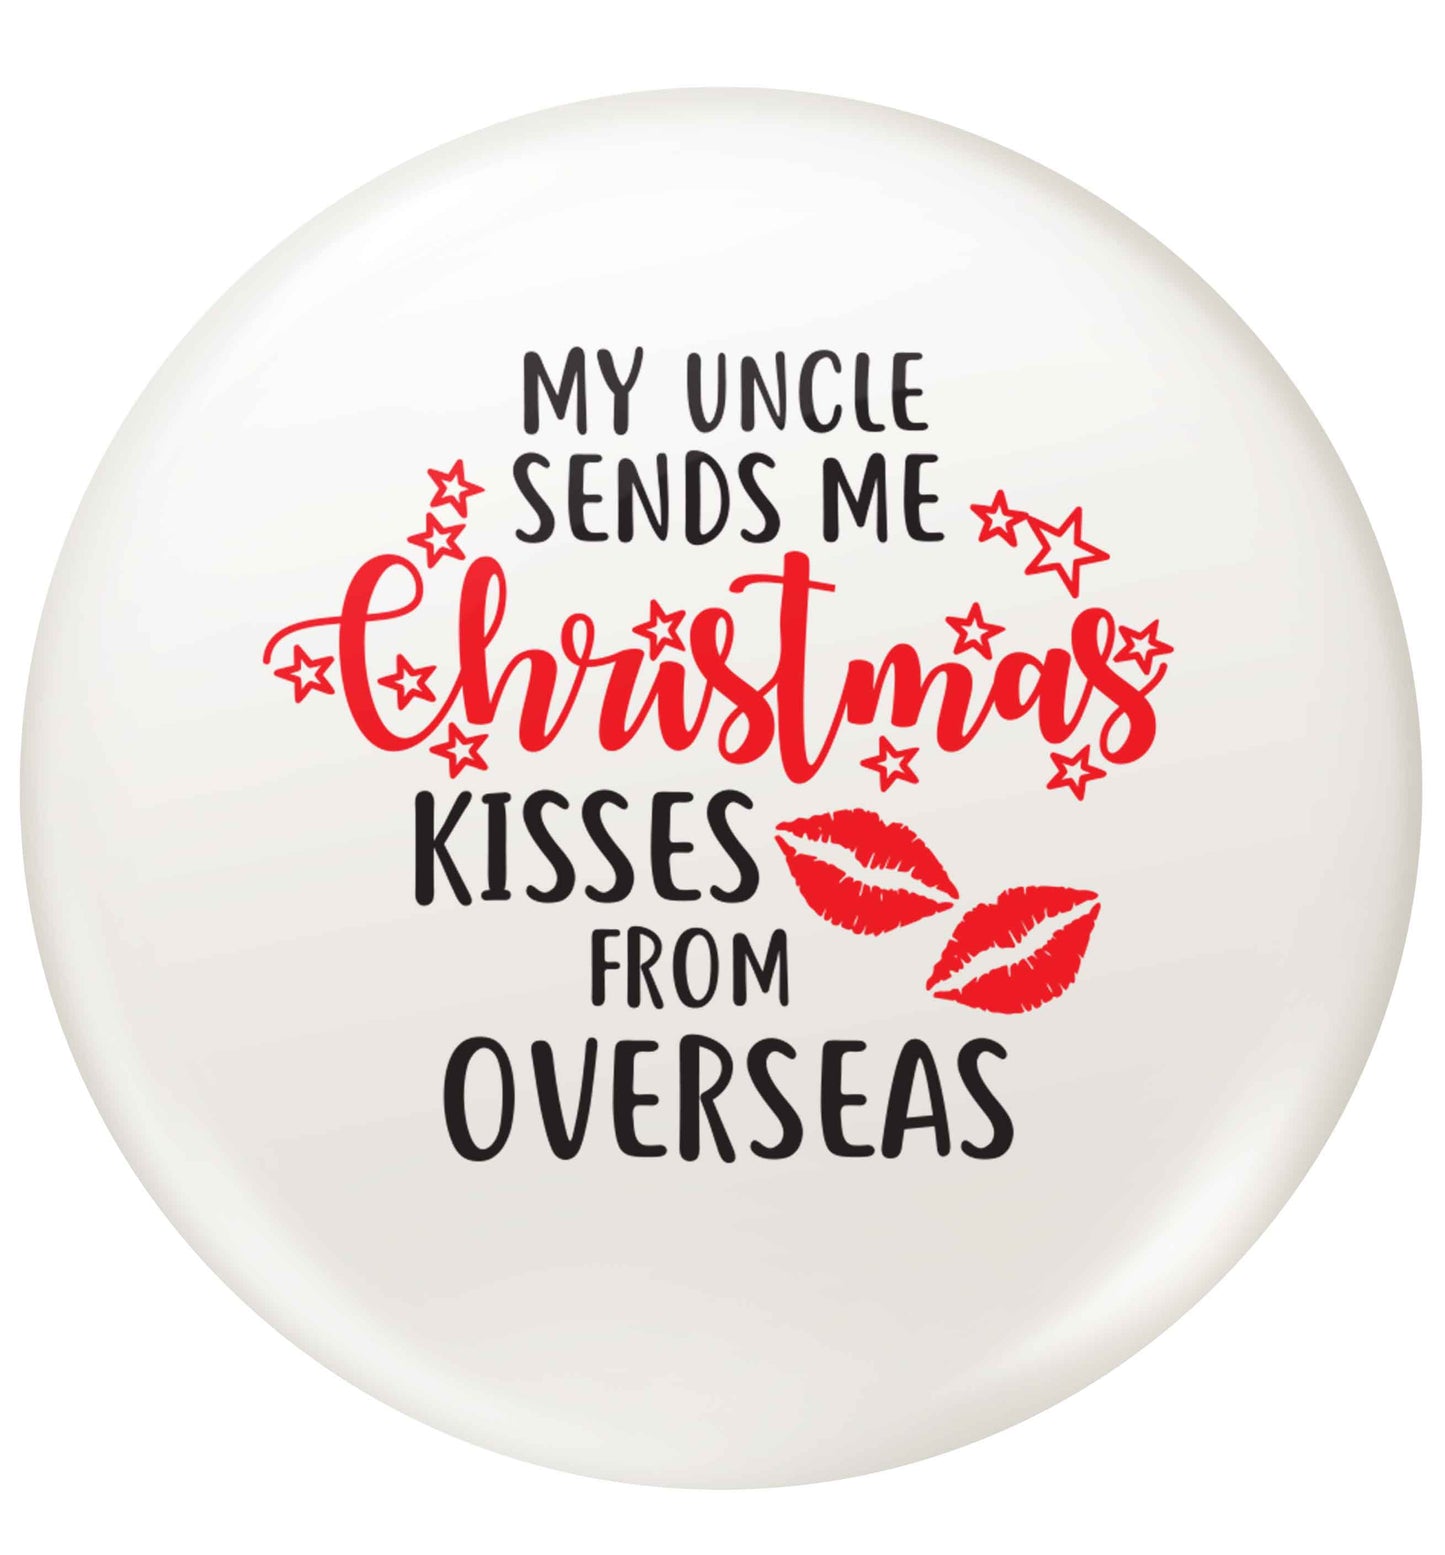 Brother Christmas Kisses Overseas small 25mm Pin badge